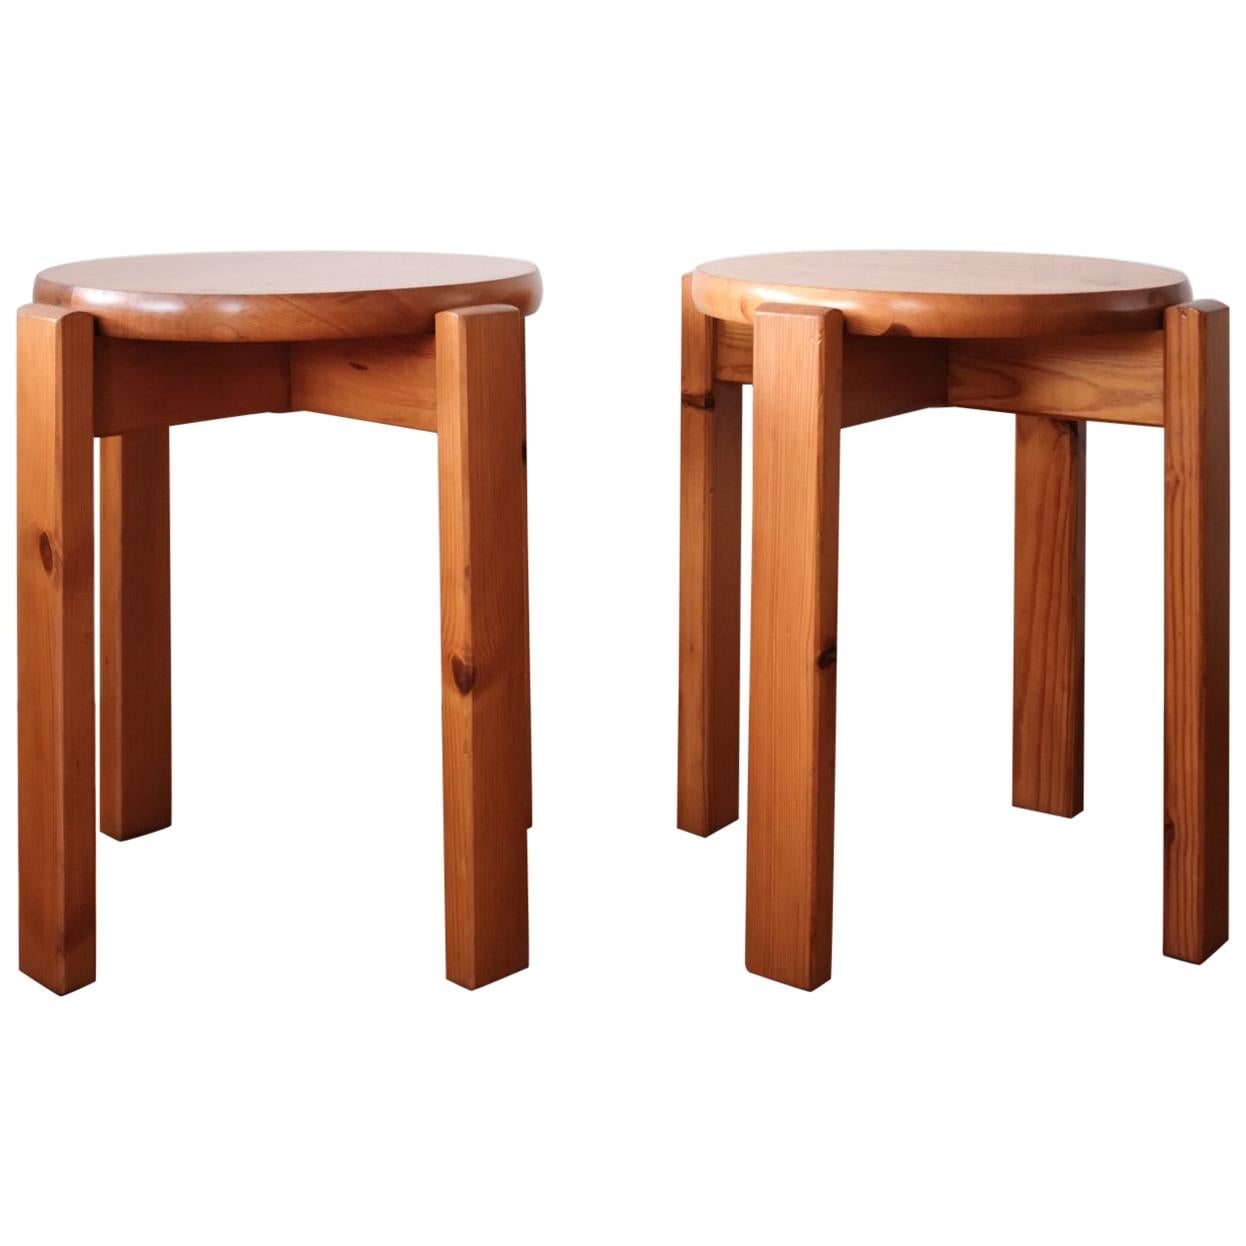 Pair of Minimalist Pine Side Tables or Stools, 1960s